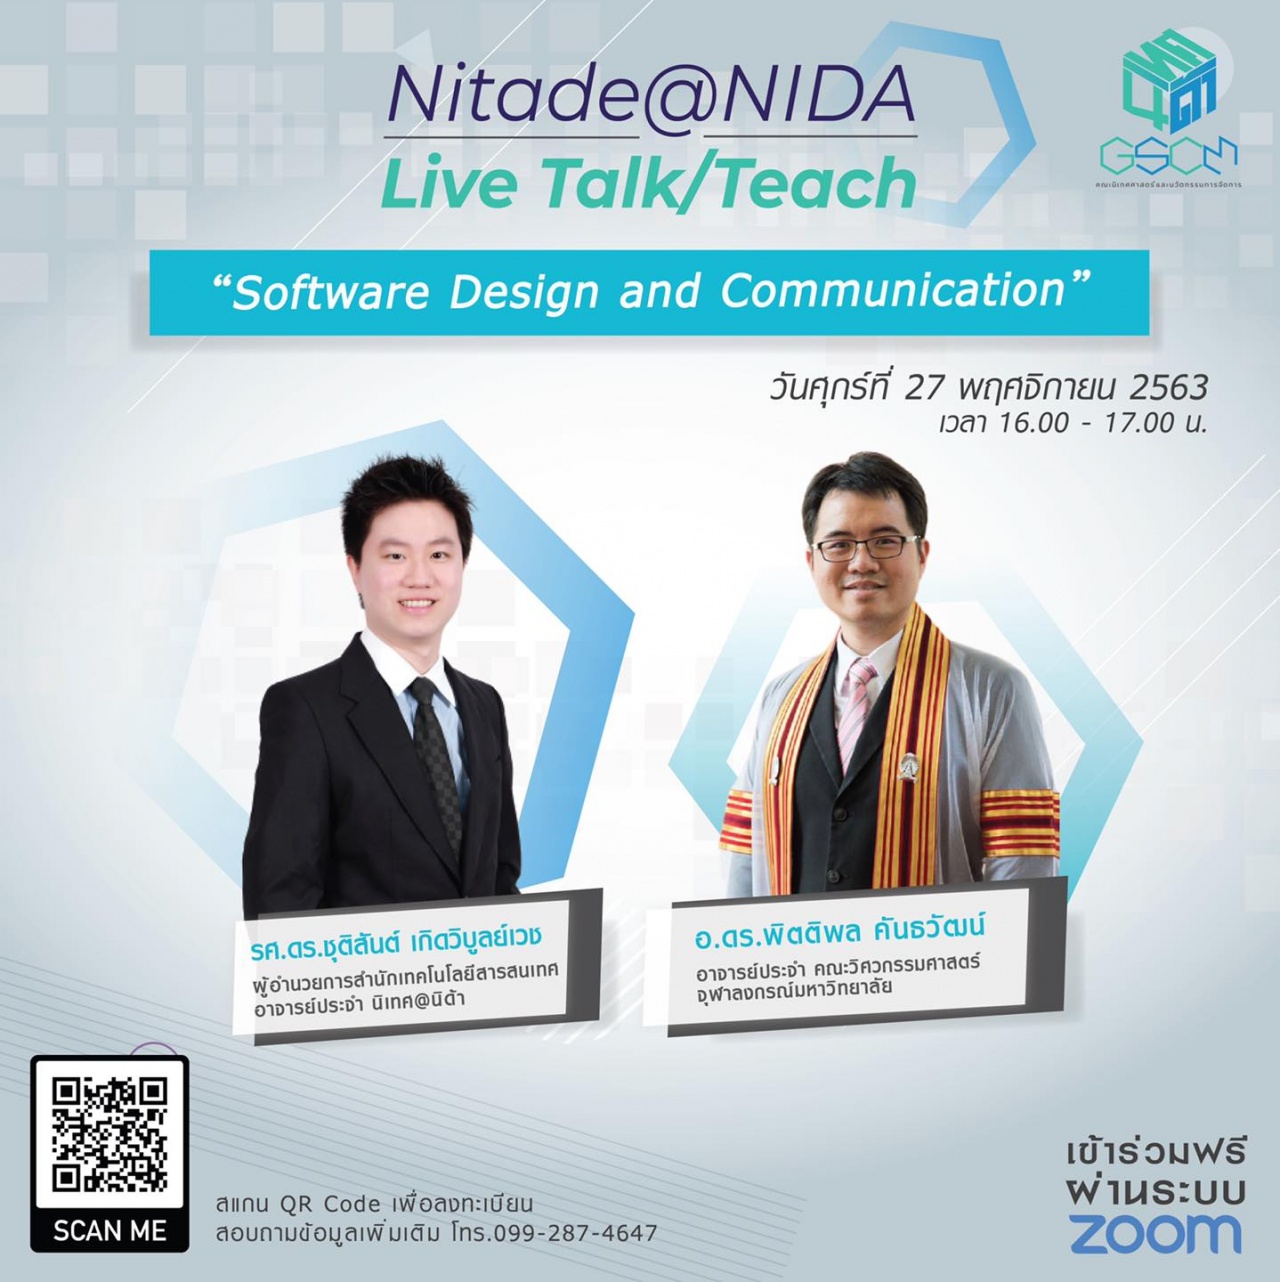 Nitade@NIDA Live Talk/Teach ในหัวข้อ "Software Design and Communication"